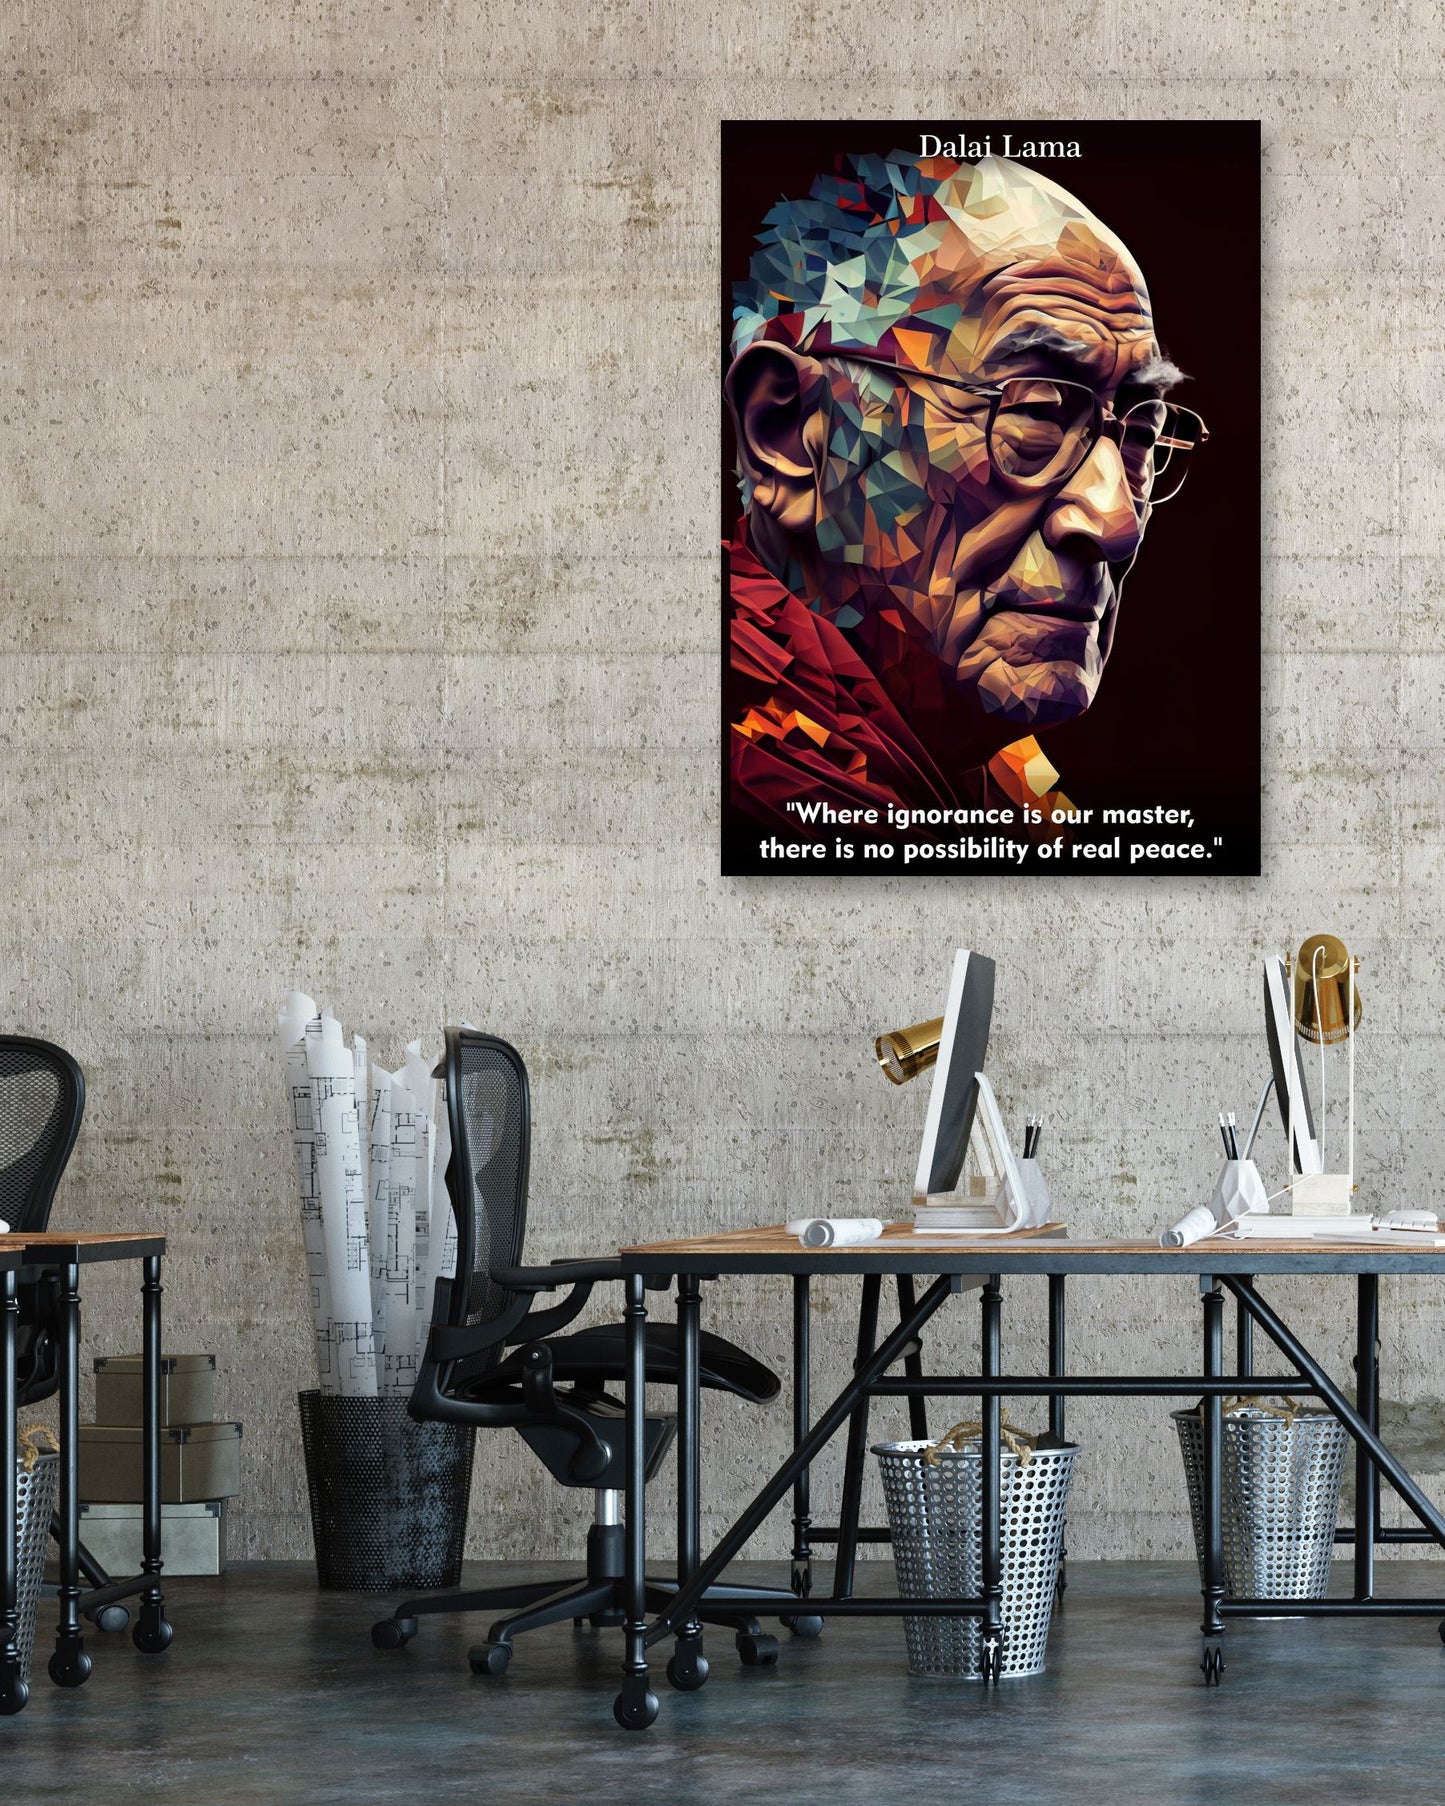 Dalai Lama Quotes - @WpapArtist